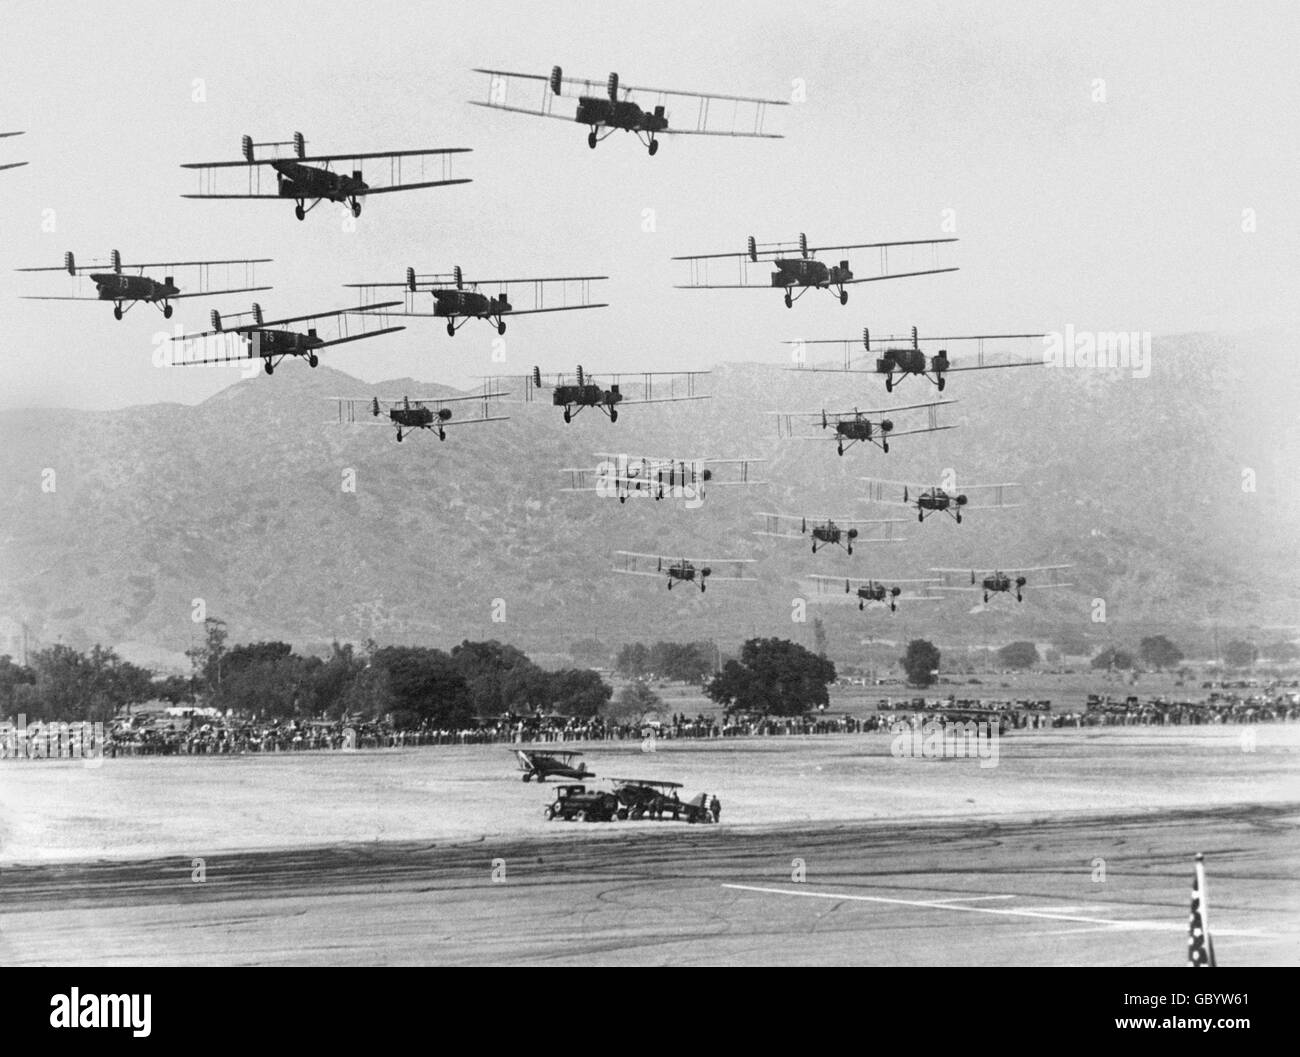 An impressive photograph of aircraft making the closing flight at the US Aerial Manoeuvres Display at Burbank, California. Stock Photo